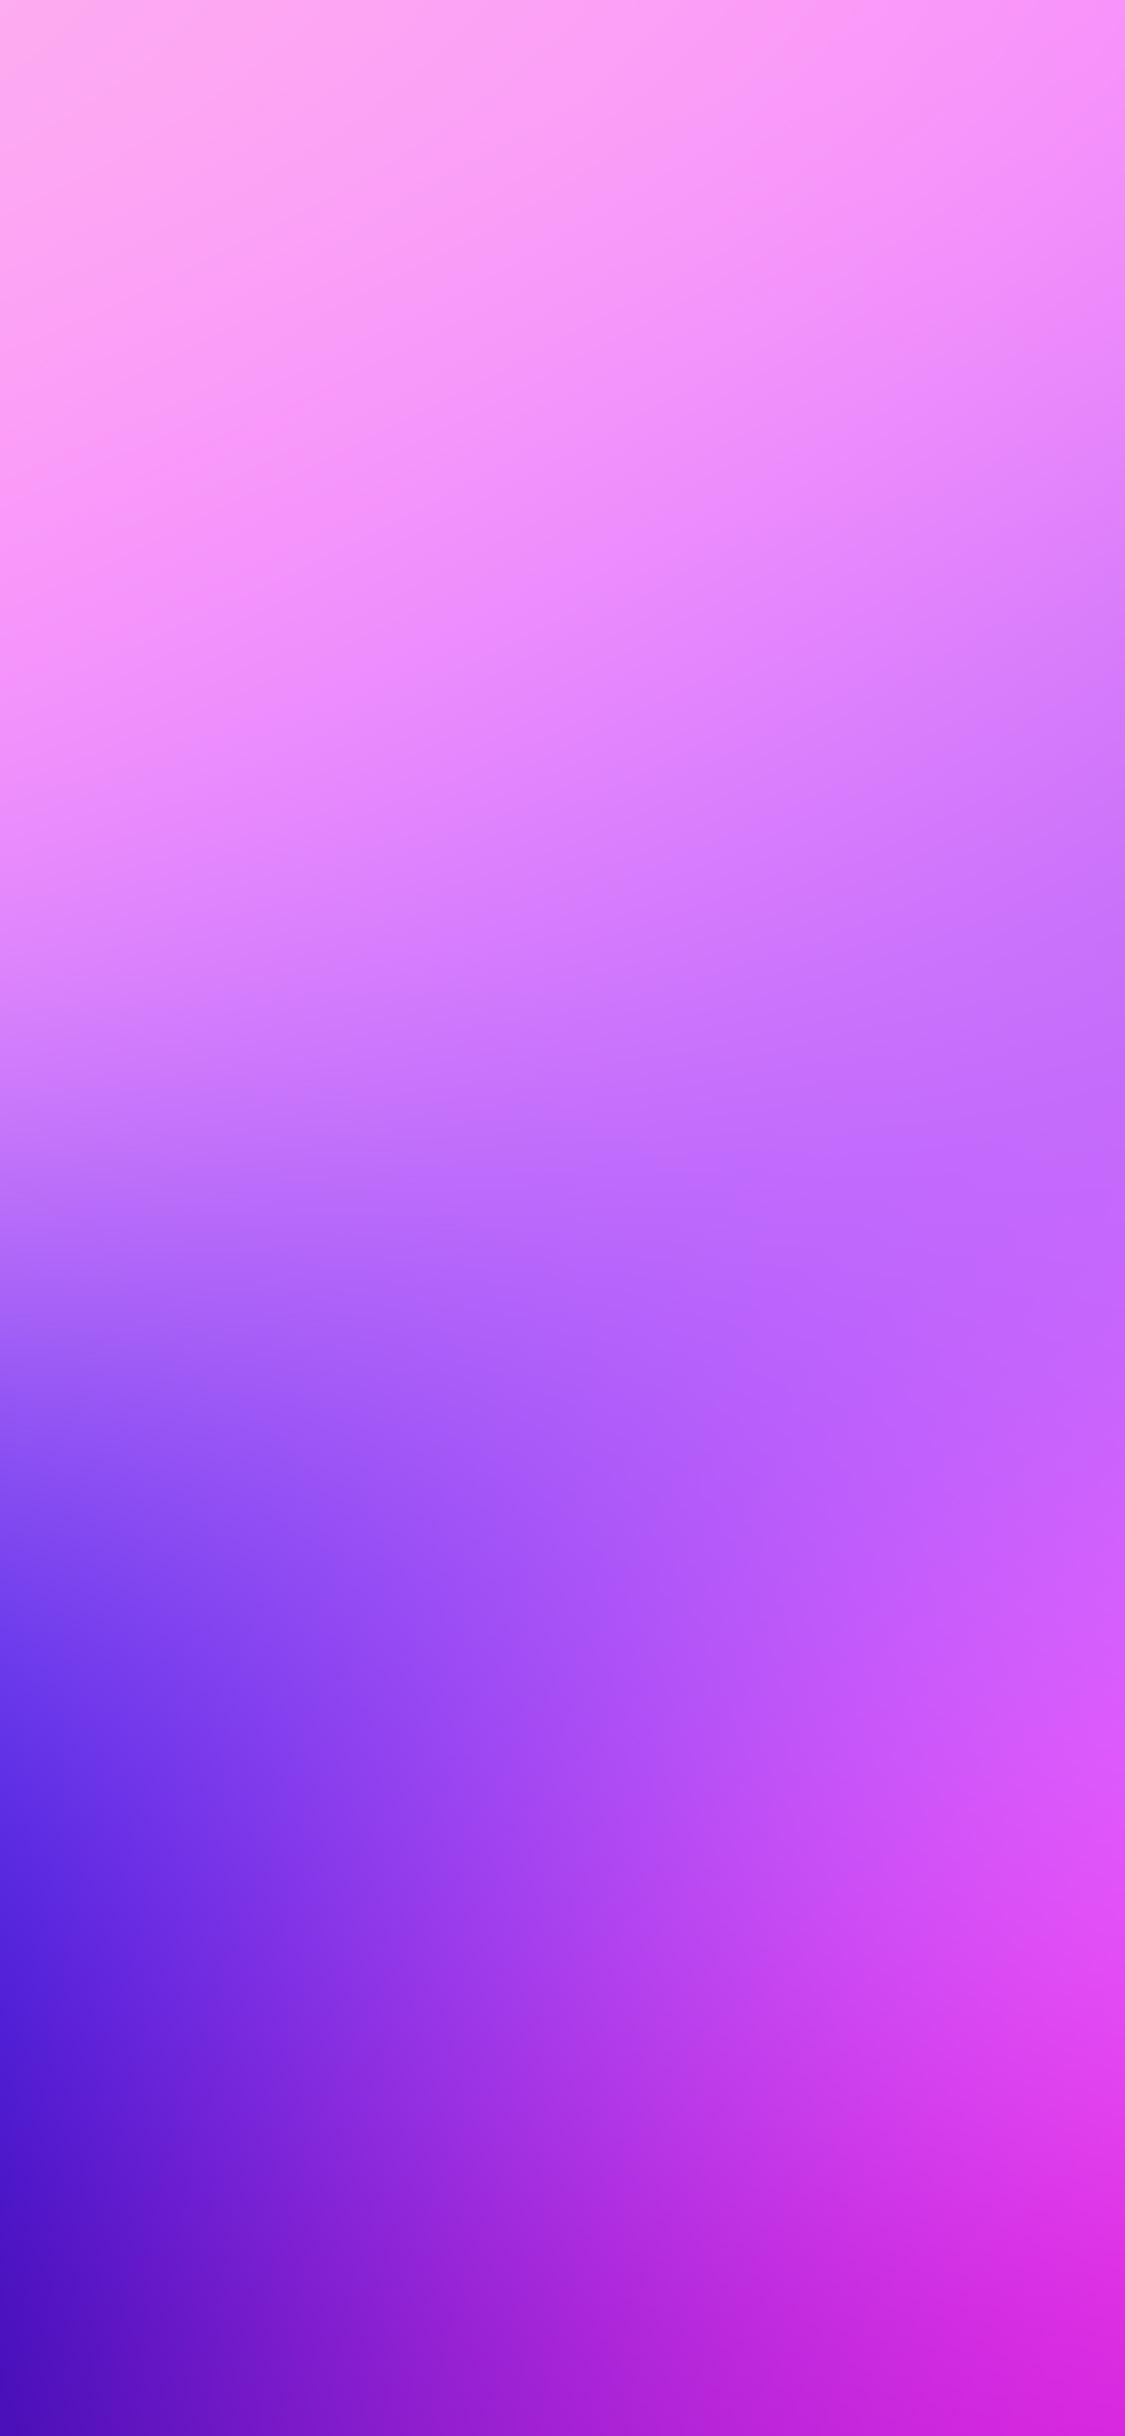 iPhone X wallpaper. purple love